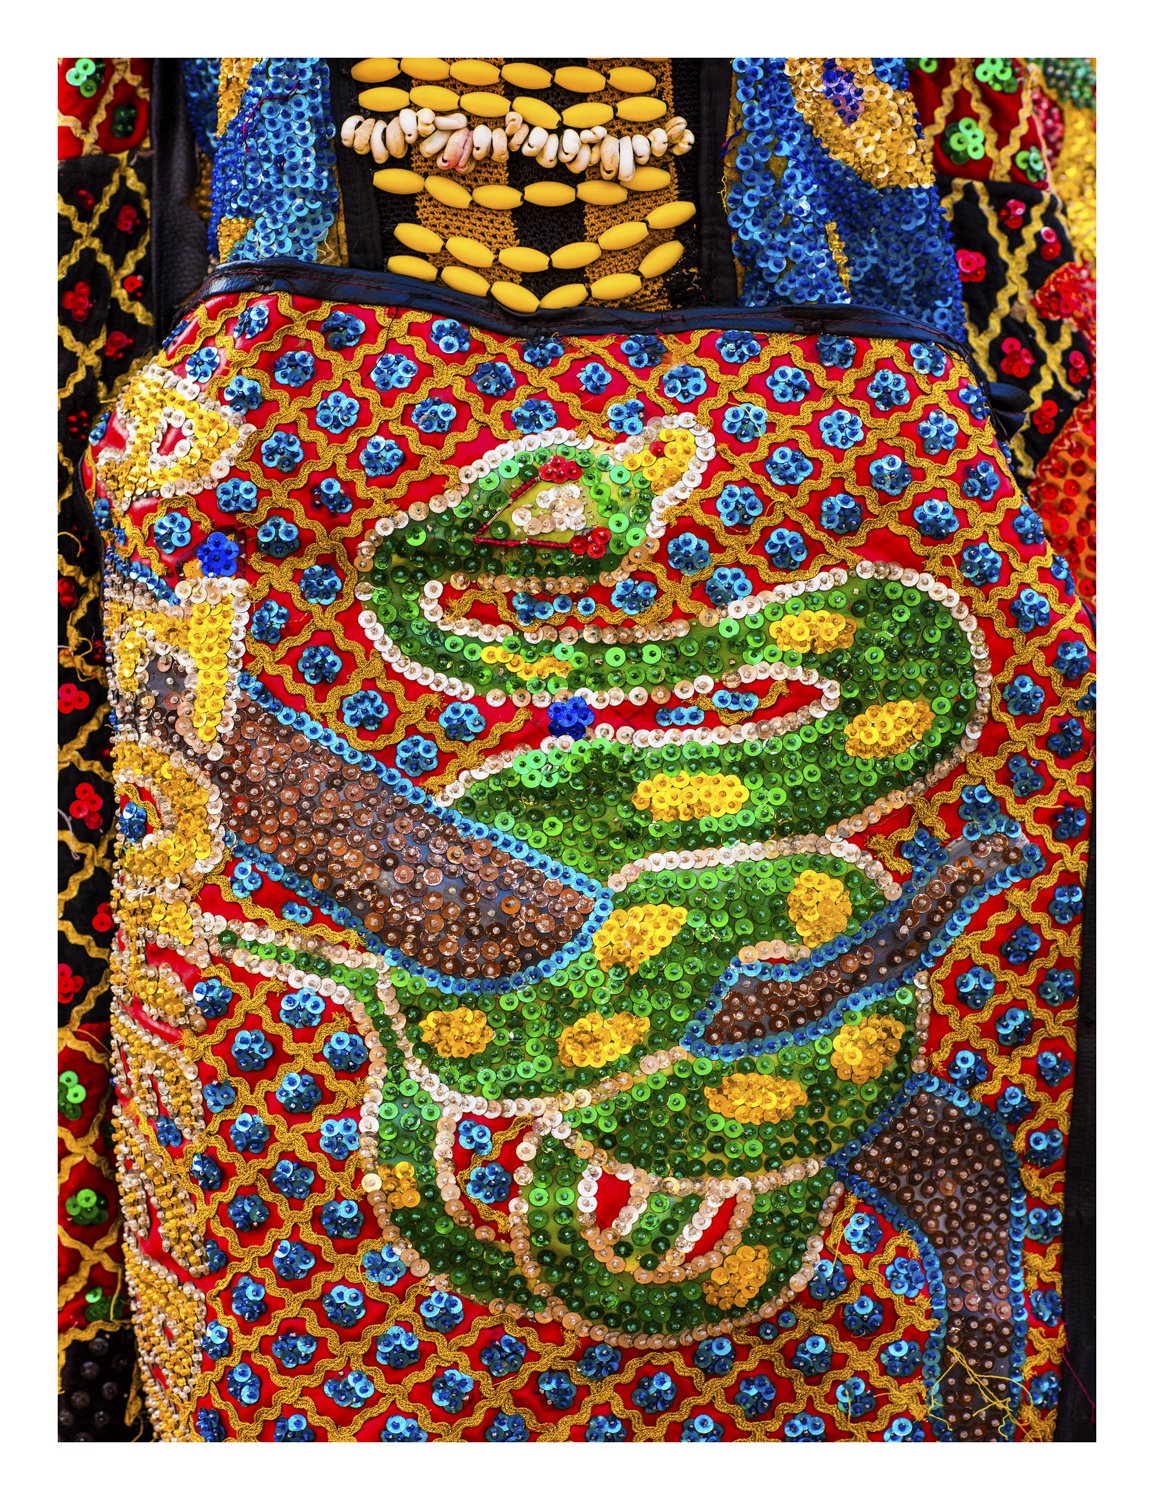 Embroidered Serpent Detail.jpg